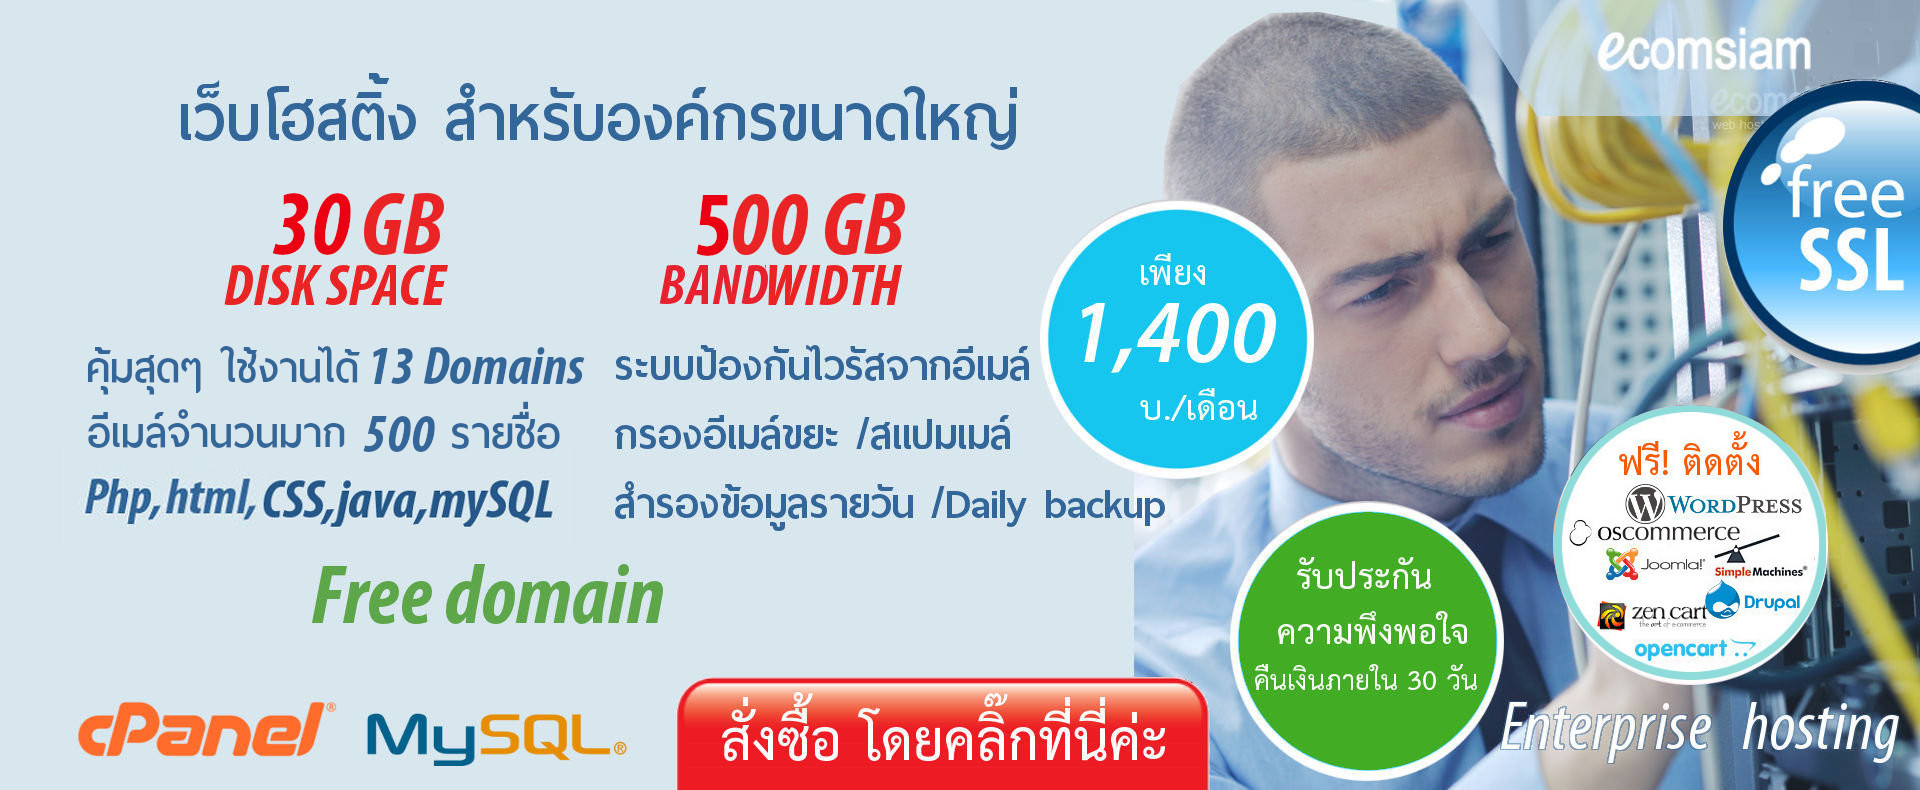 web hosting thai แนะนำ Enterprise web hosting thailand เว็บโฮสต์ติ้งสำหรับองค์กรขนาดใหญ่ ไม่จำกัดโดเมน ราคาเพียง 1,400 บ./เดือน เว็บโฮสติ้งไทย ฟรี โดเมน ฟรี SSL ฟรีติดตั้ง แนะนำเว็บโฮสติ้ง บริการลูกค้า  Support ดูแลดี โดย webhostthai.com - enterprise web hosting thailand free domain